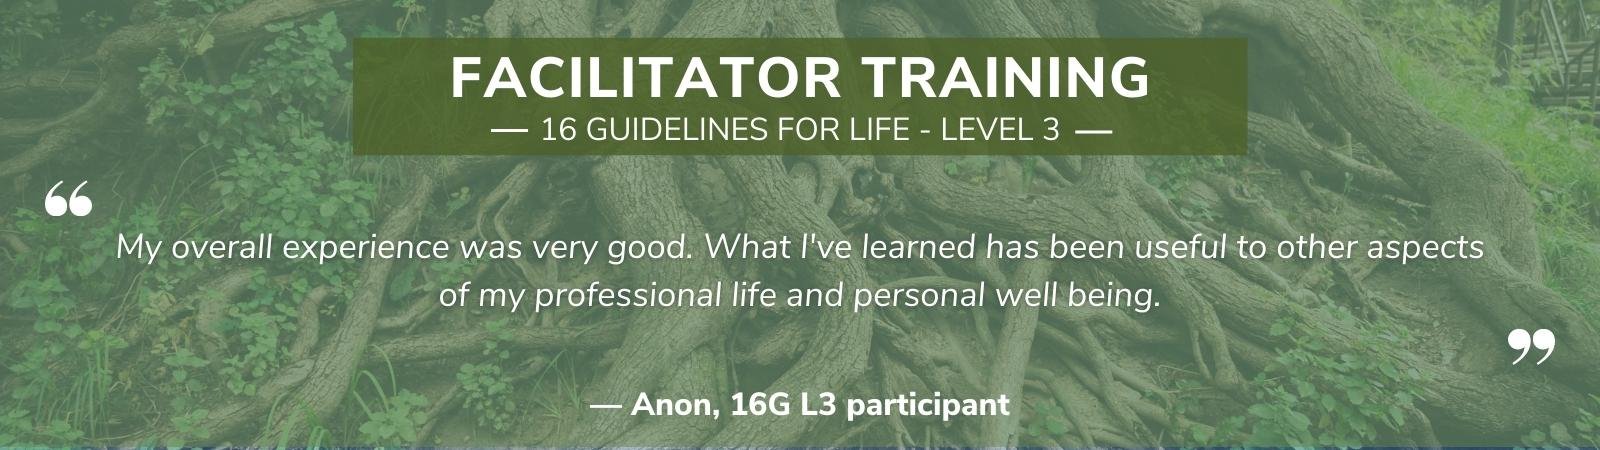 Testimonial - Facilitator Training - Anon.jpg